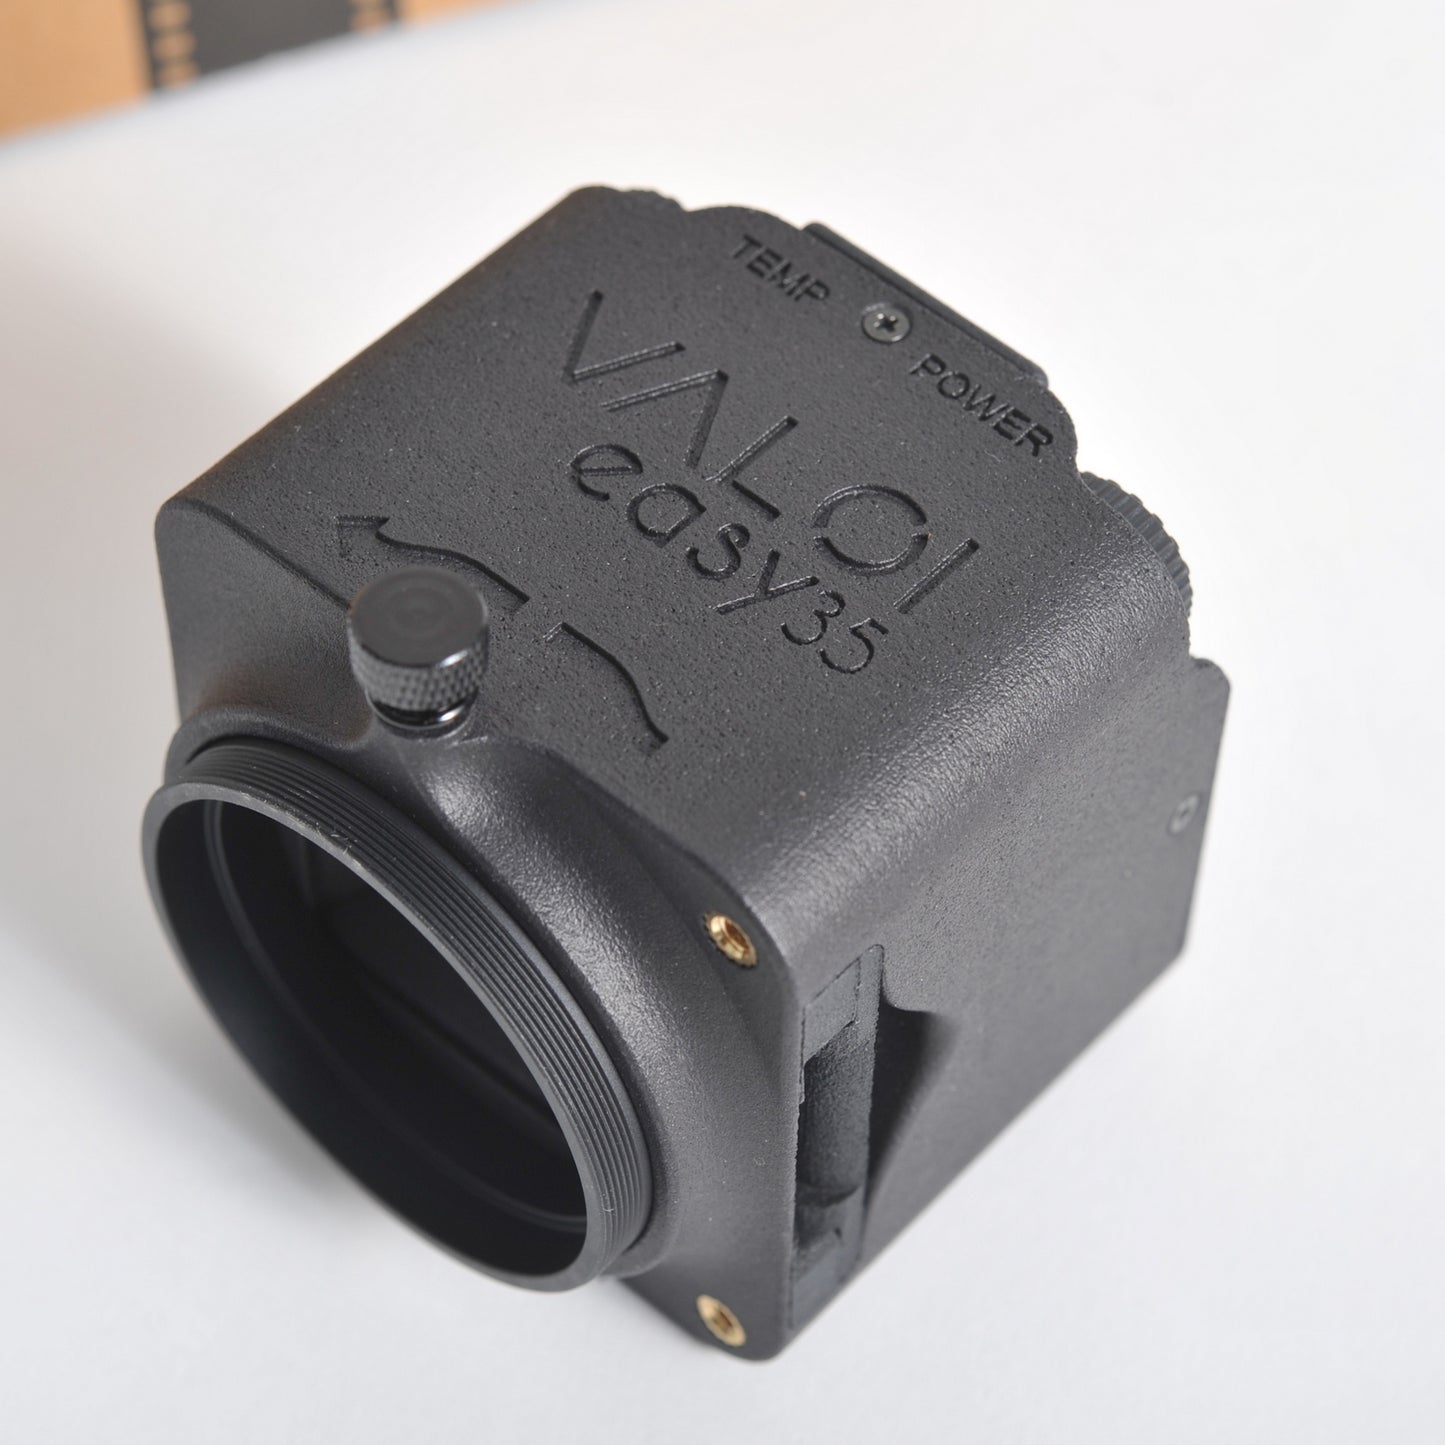 VALOI easy35 film scanning フィルムスキャナー　メインキット